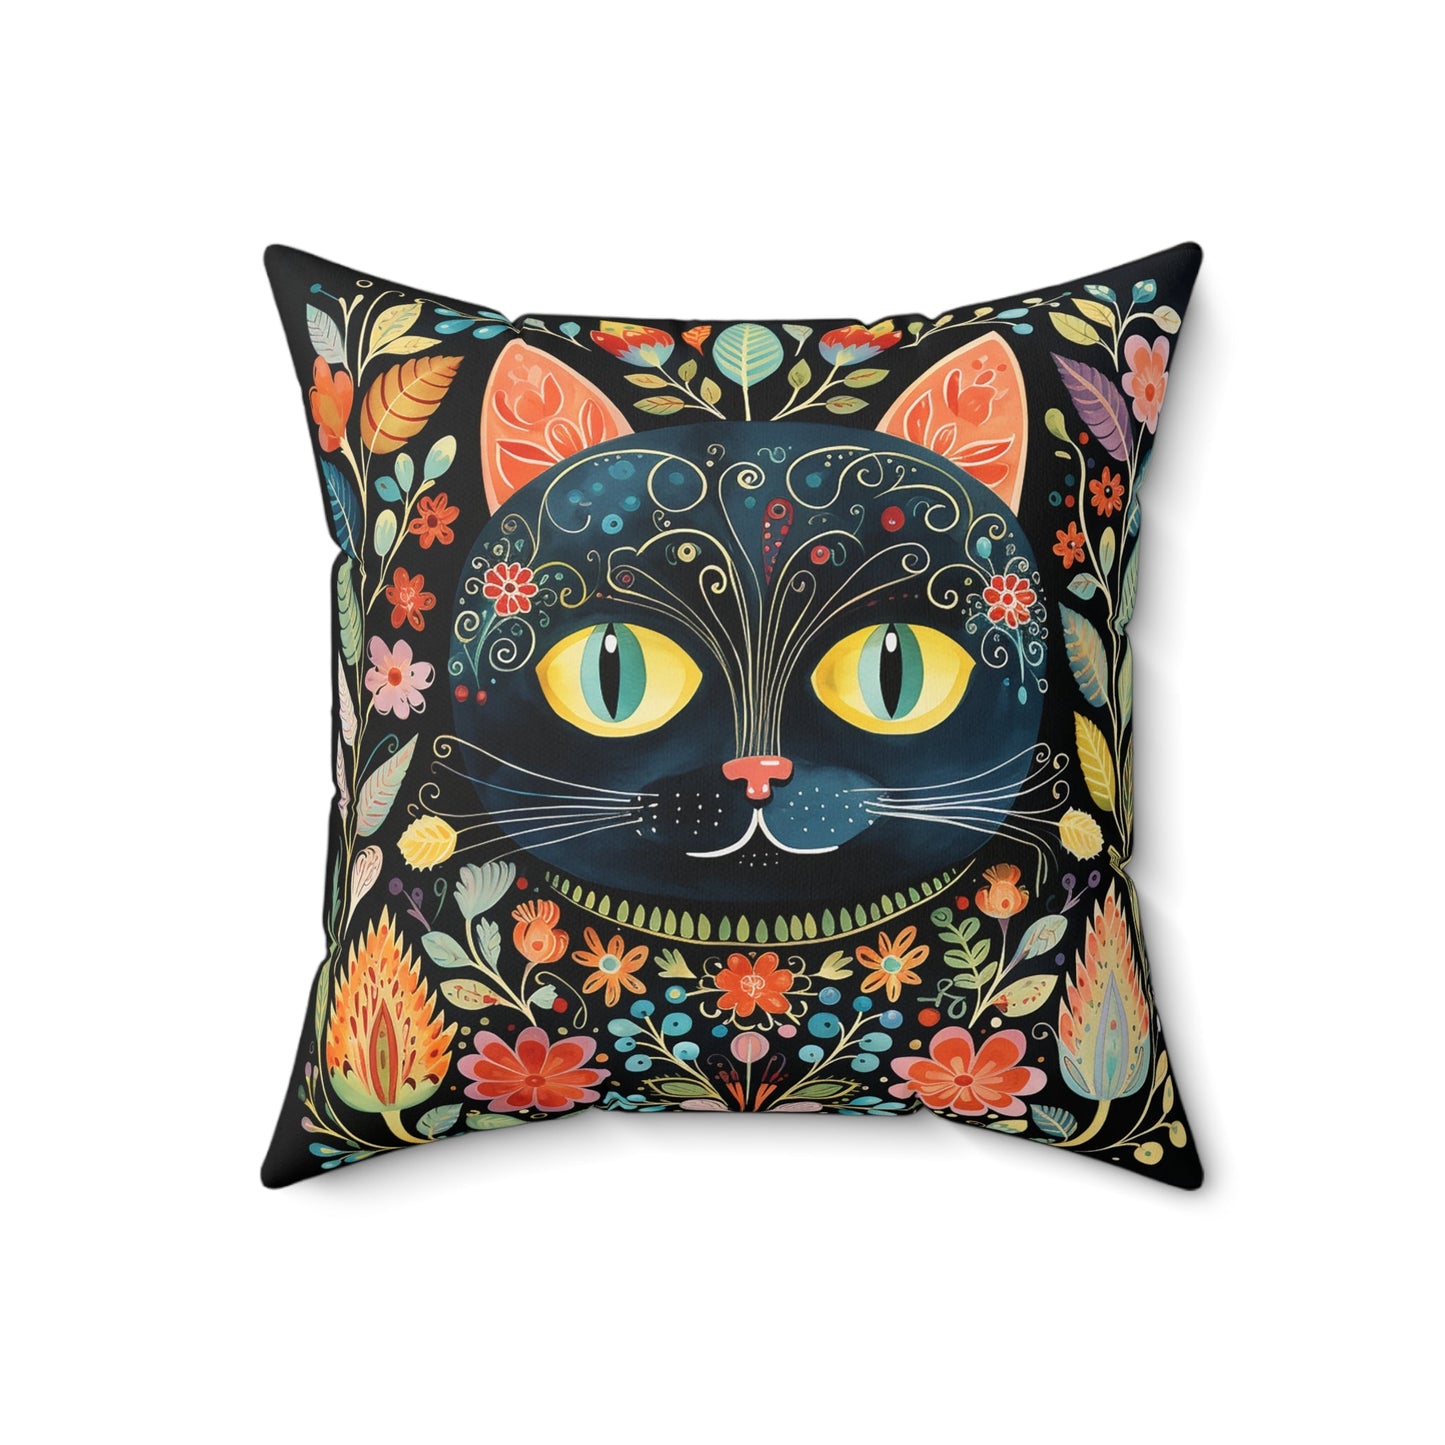 Cat Pillow - Decorative Cat Boho Print Throw Pillow Cover 4 sizes, Bright Boho Decor, Pillowcase, Vintage Folk Art, Gift for Artists, Accent - FlooredByArt